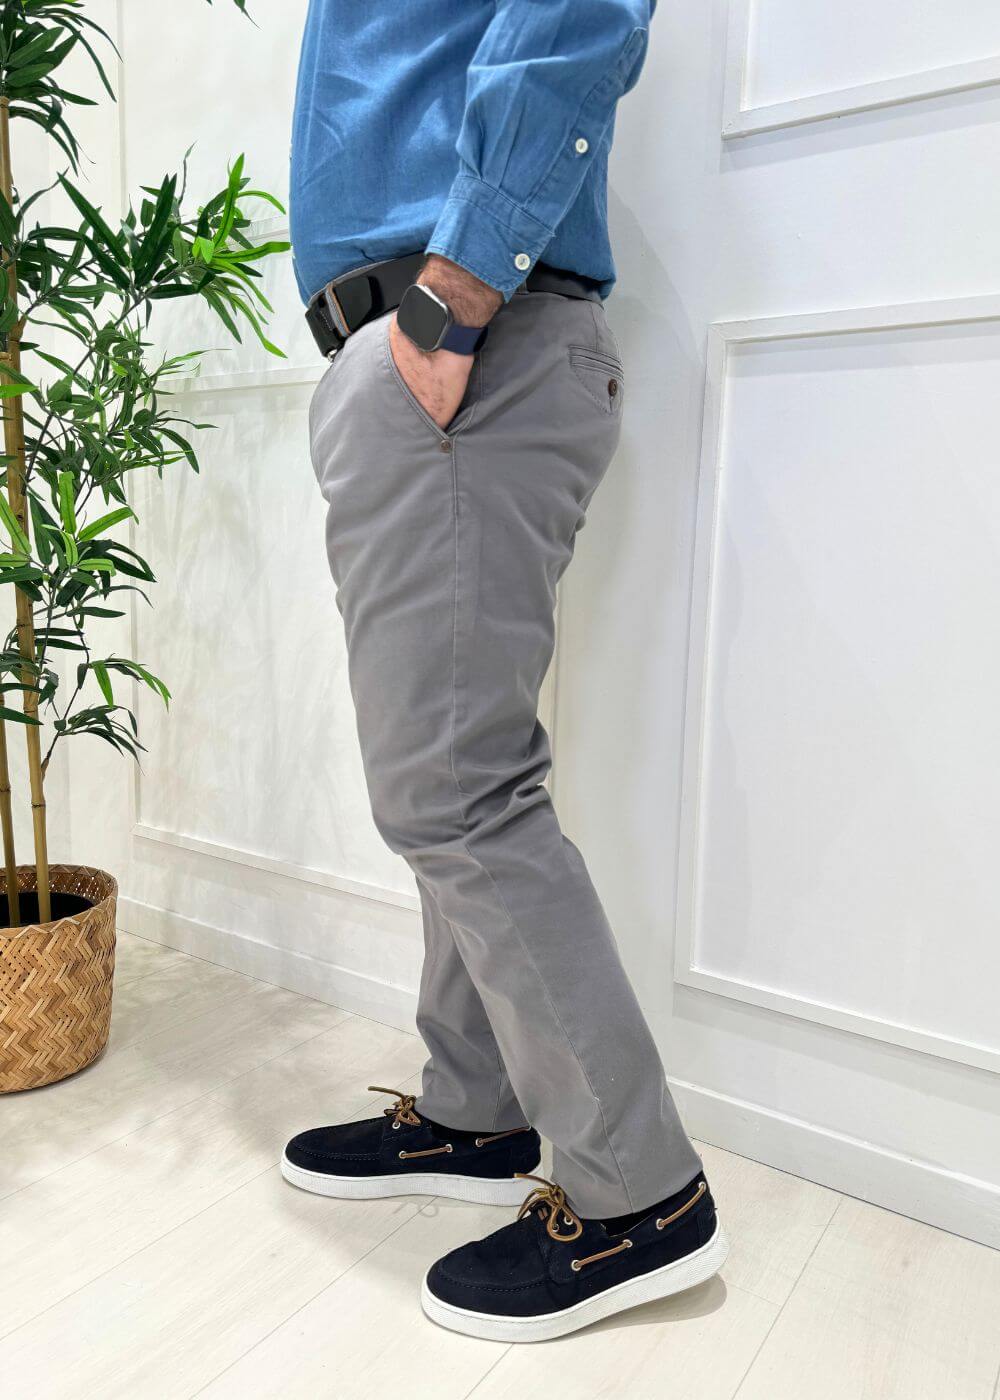 Pantalone tasca classica microfantasia - GRIGIO